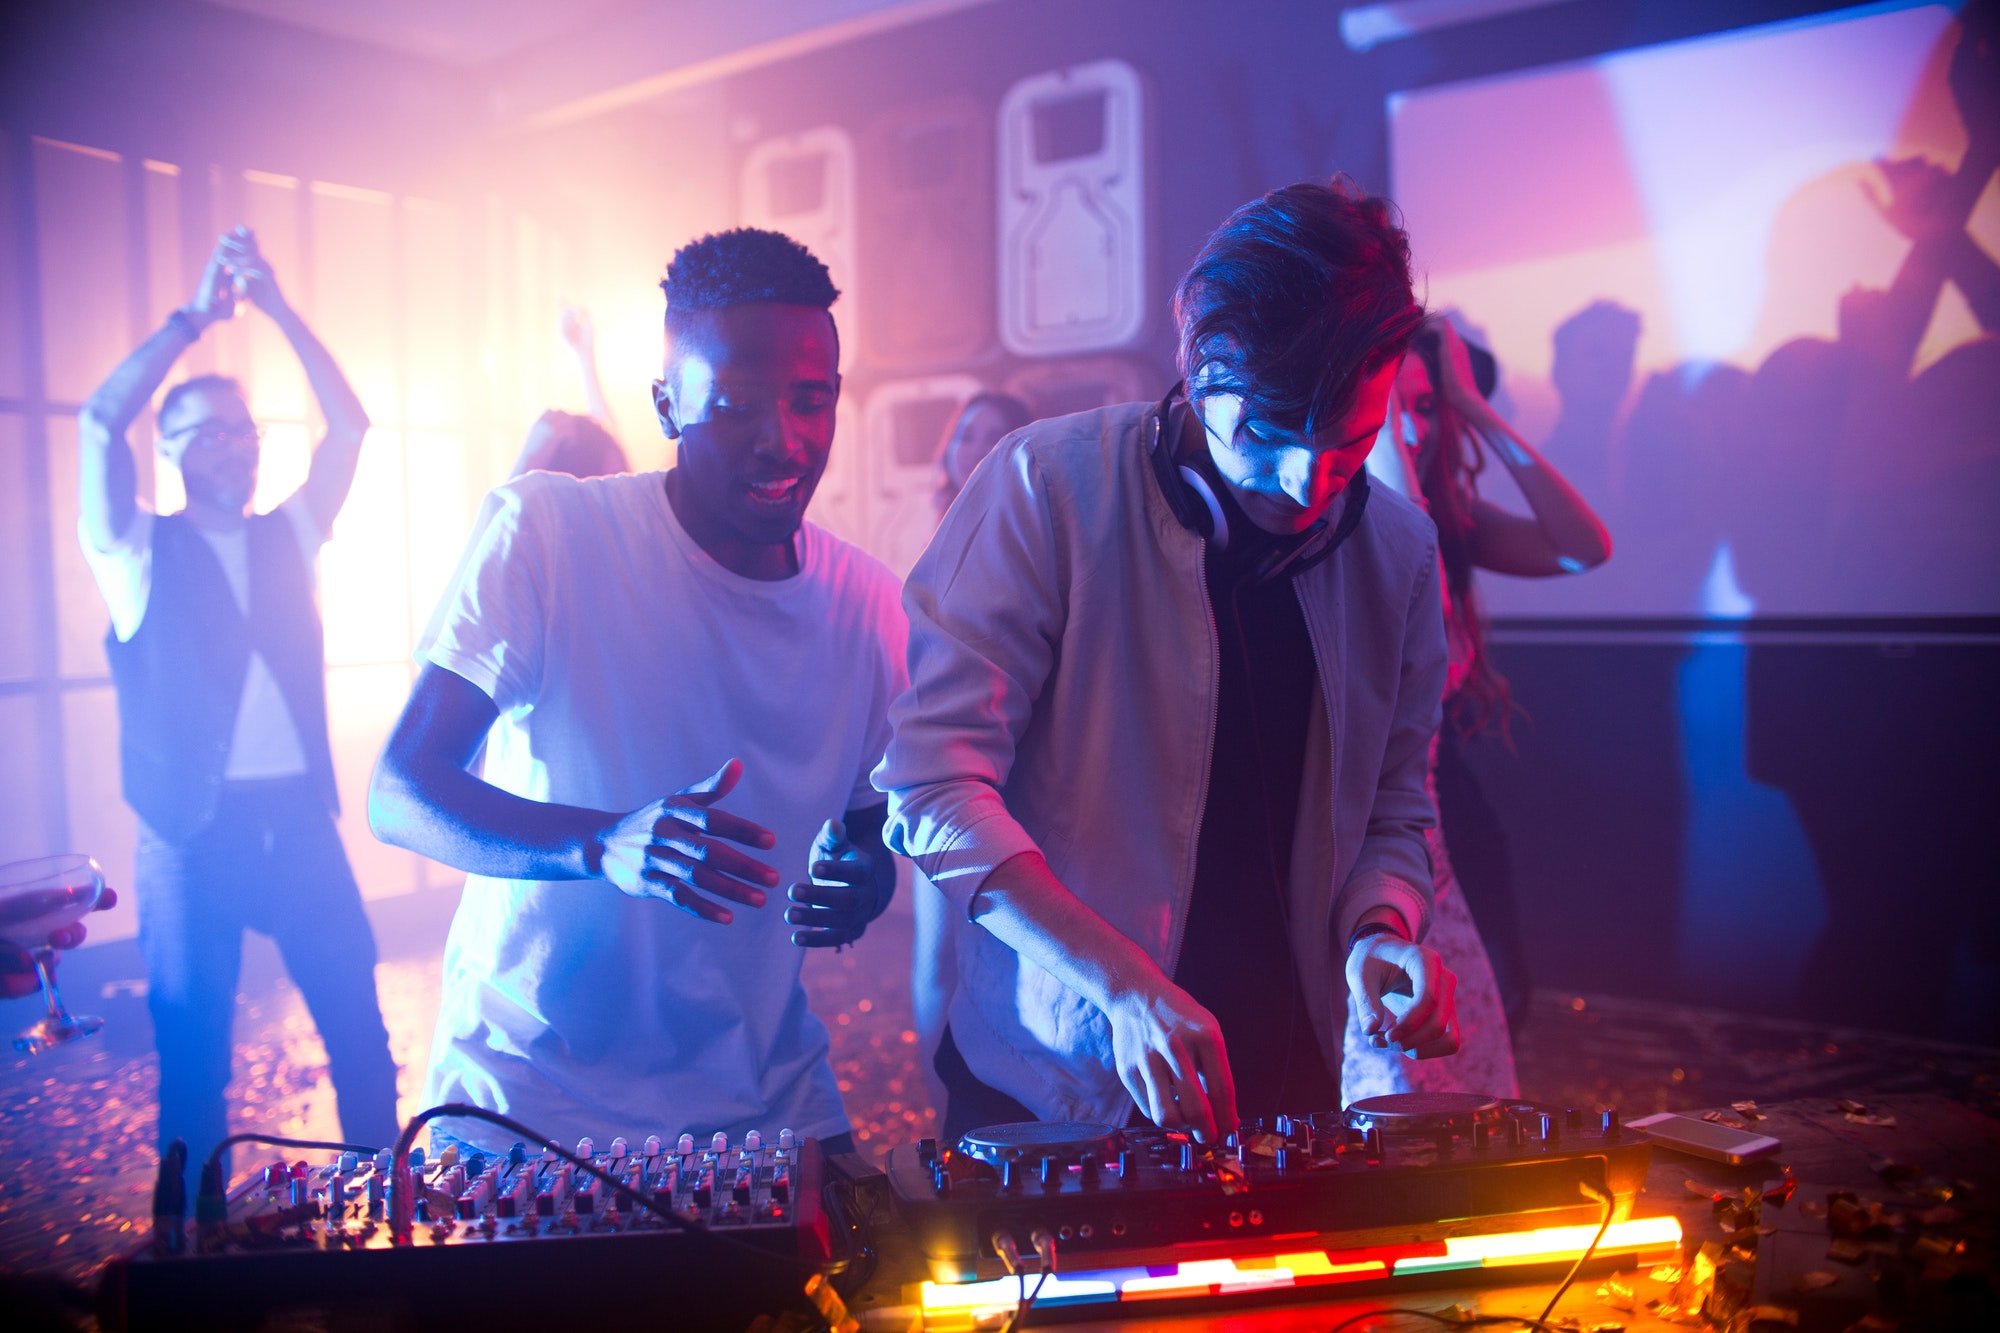 DJ Playing in Nightclub